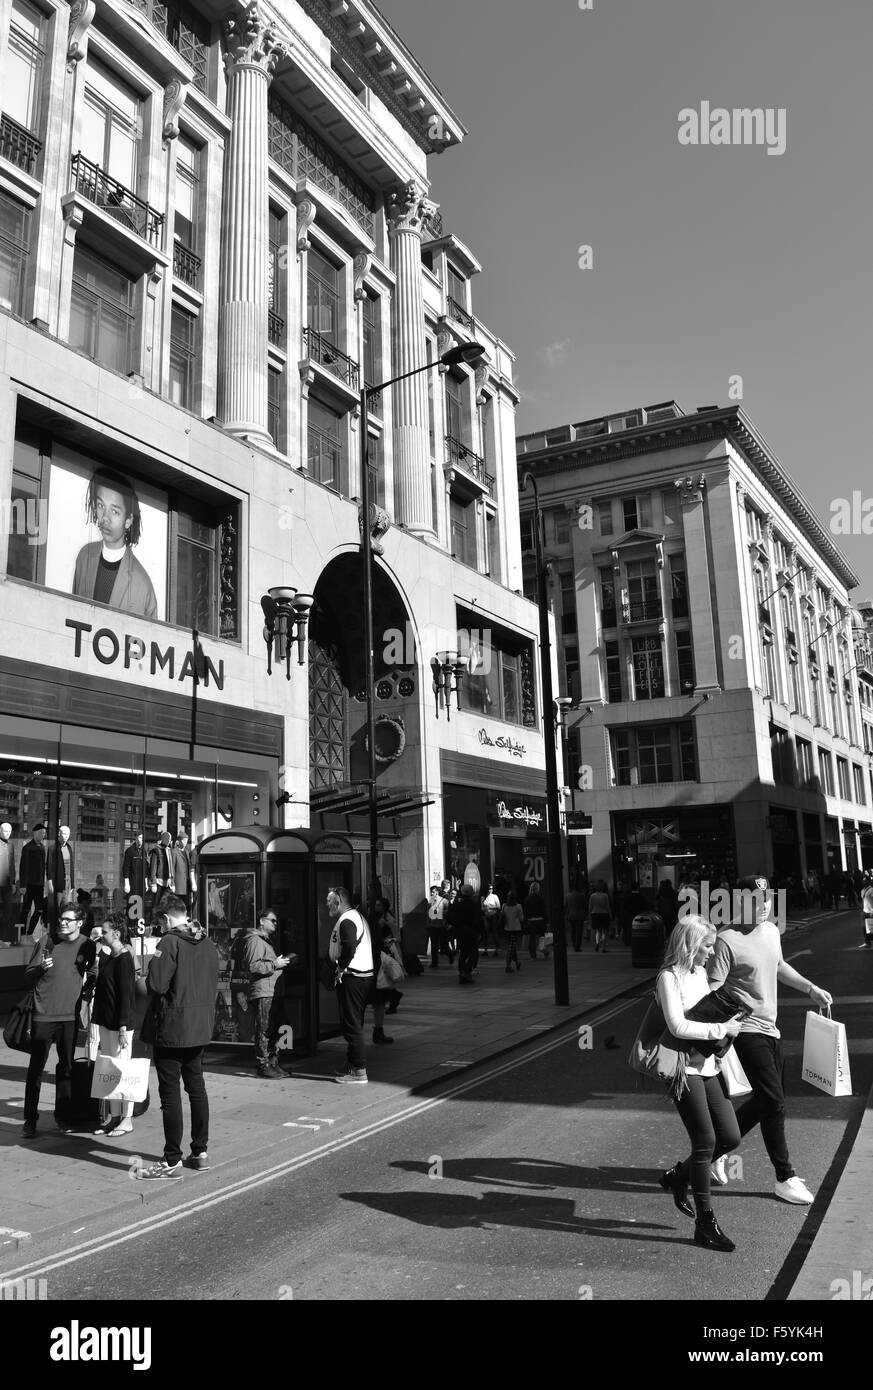 Shoppers Crossing, Oxford Street, London, England Stock Photo - Alamy